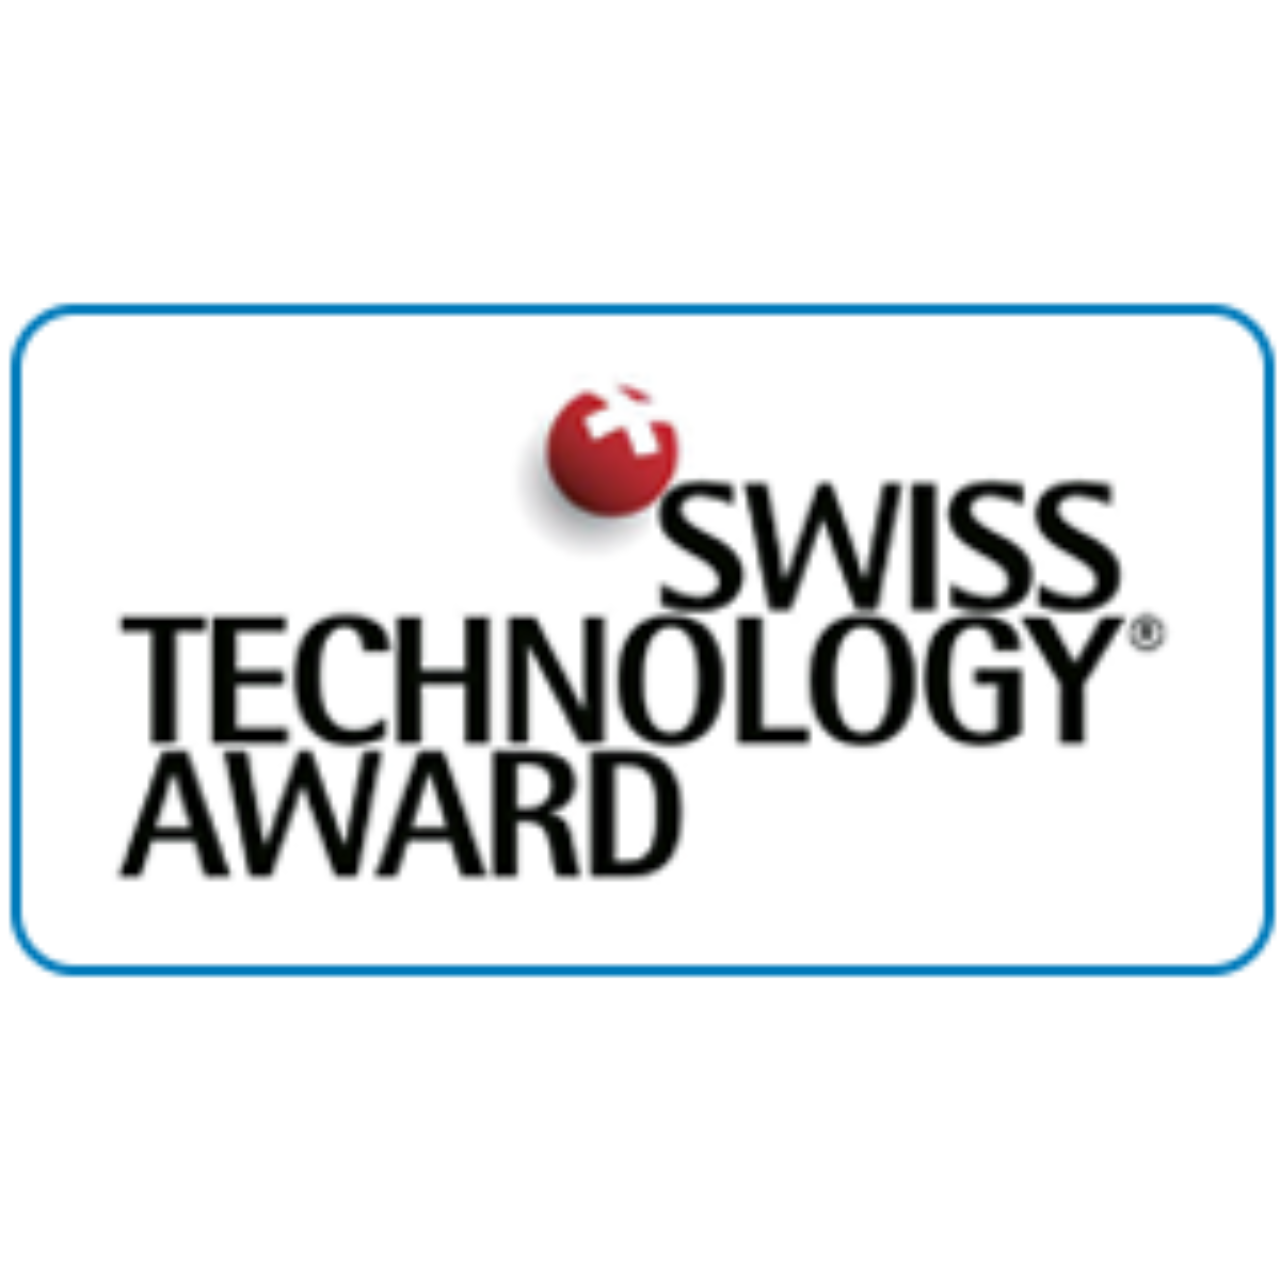  Swiss Technology Award